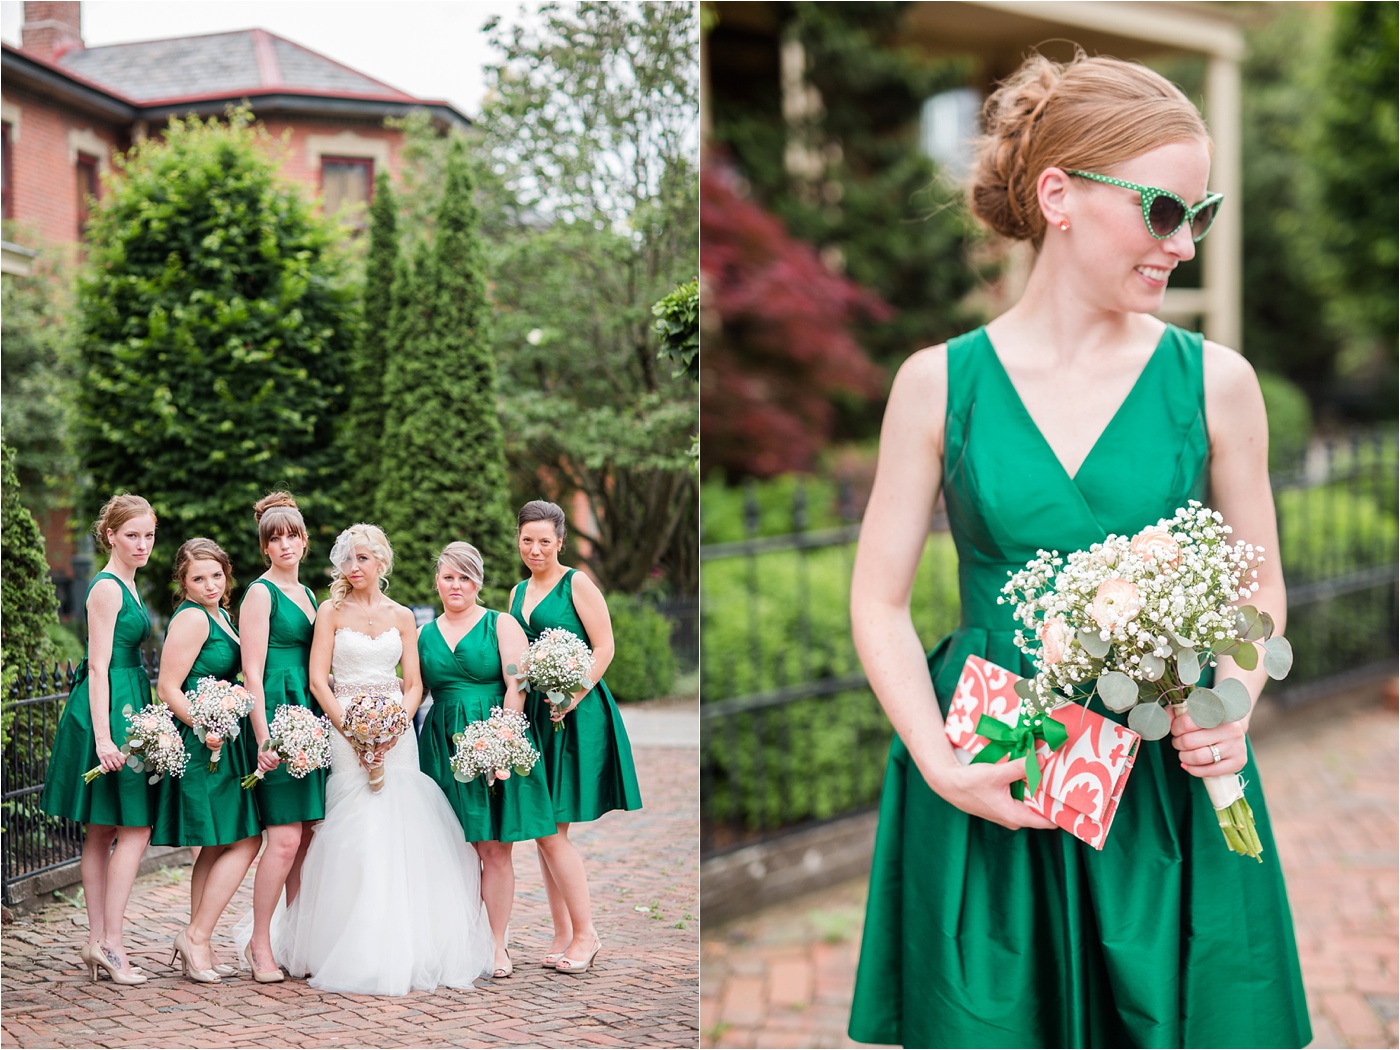 Kelly Green Summer Wedding at Via Vecchia Winery | KariMe Photography_0061